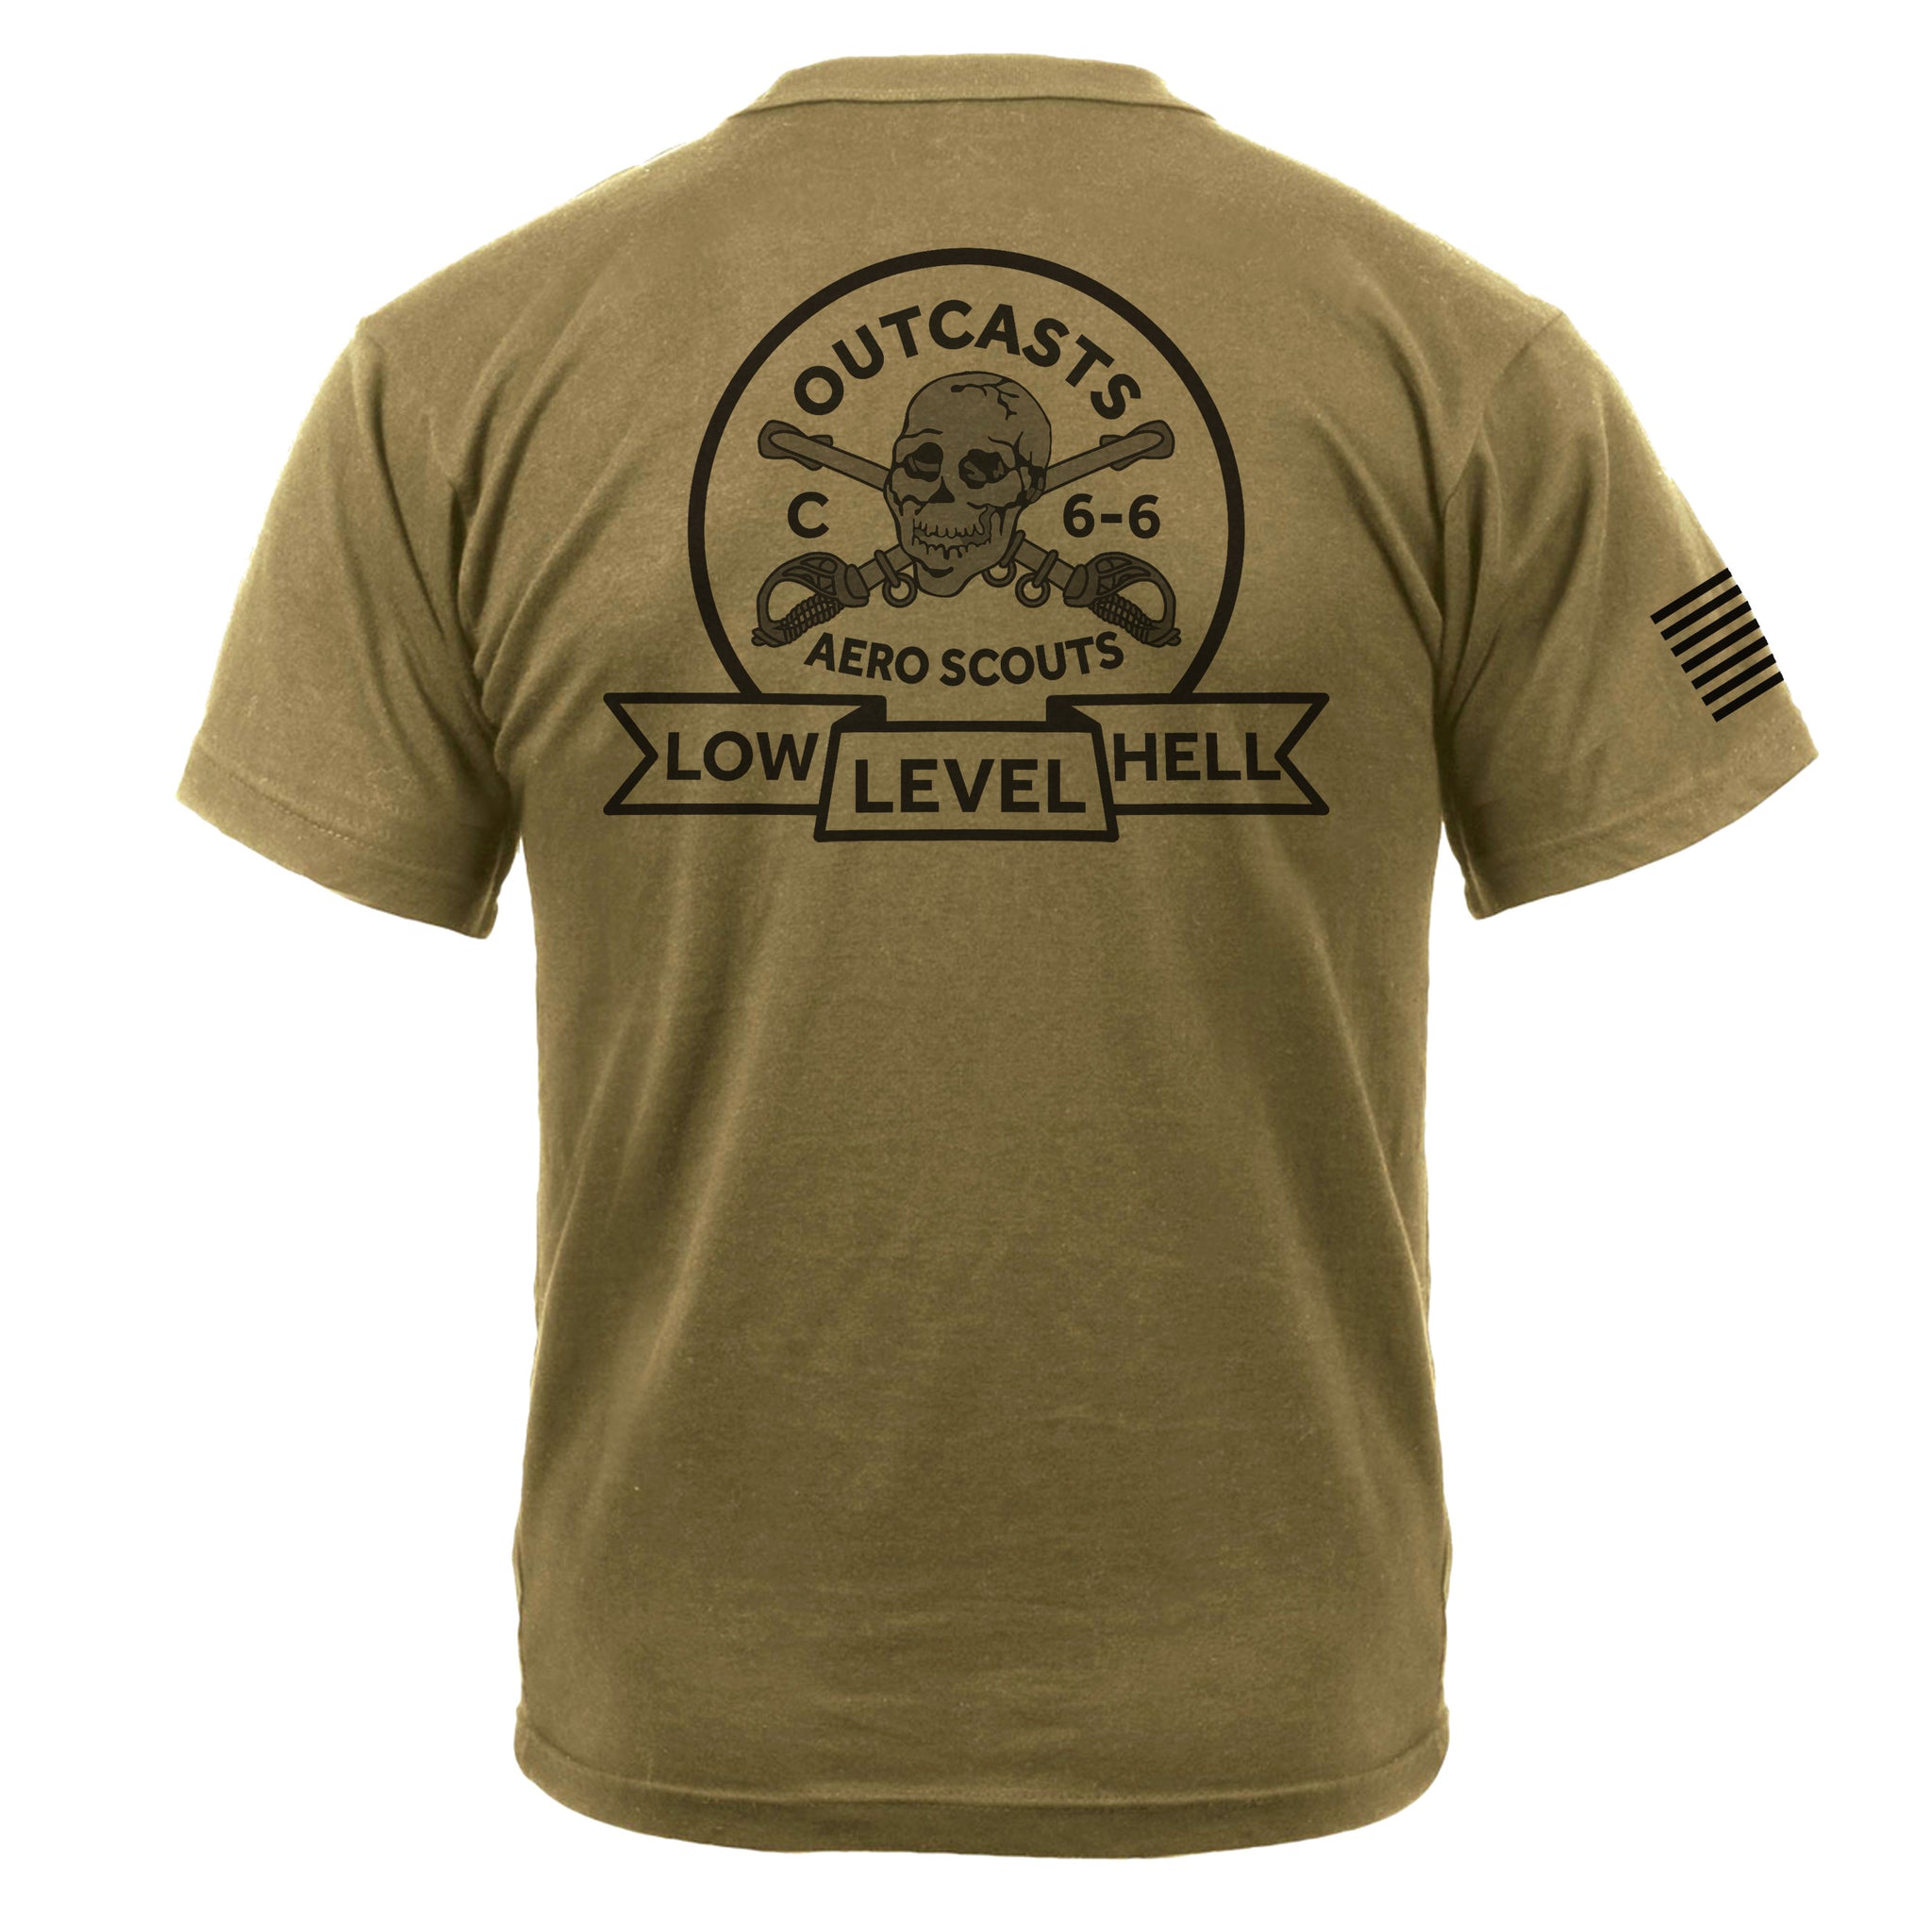 C Troop 6-6 CAV Uniform Shirt